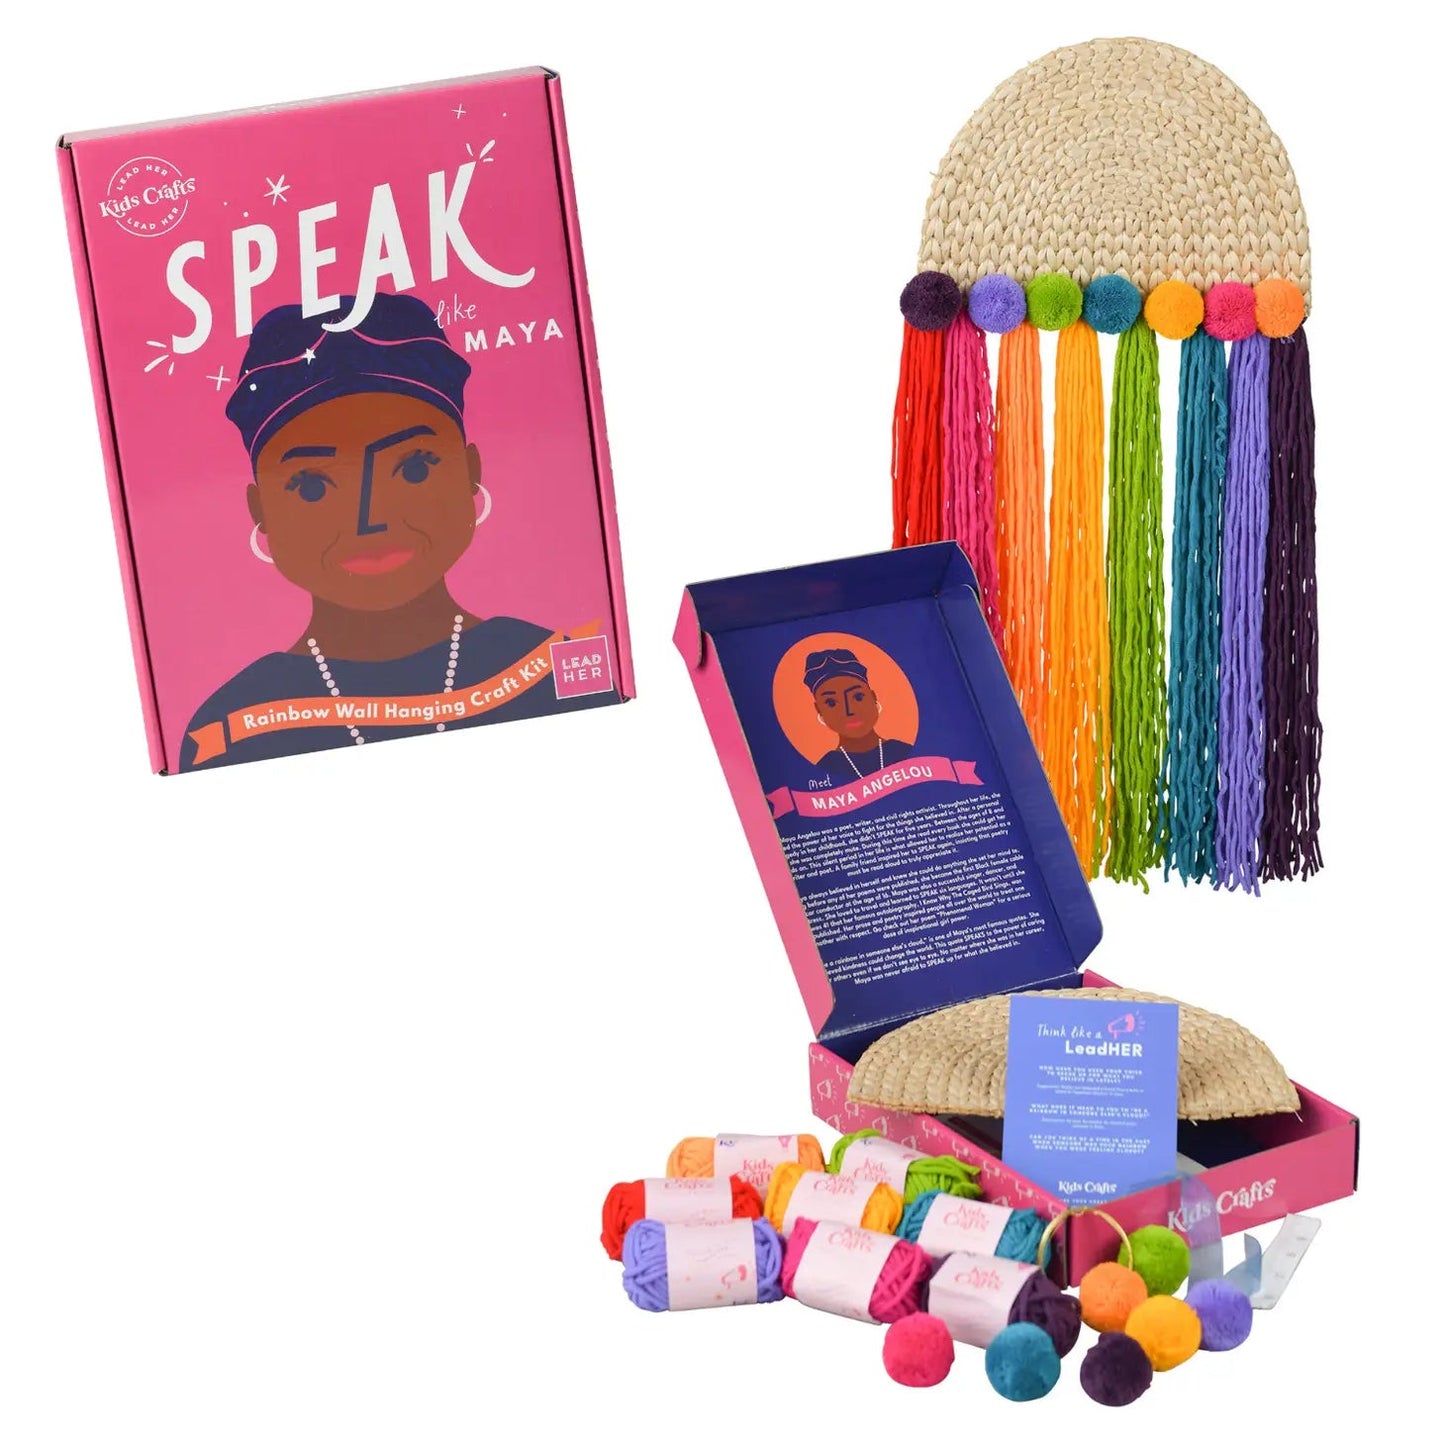 SPEAK like Maya: Rainbow Wall Hanging Craft Kit - Henry + Olives